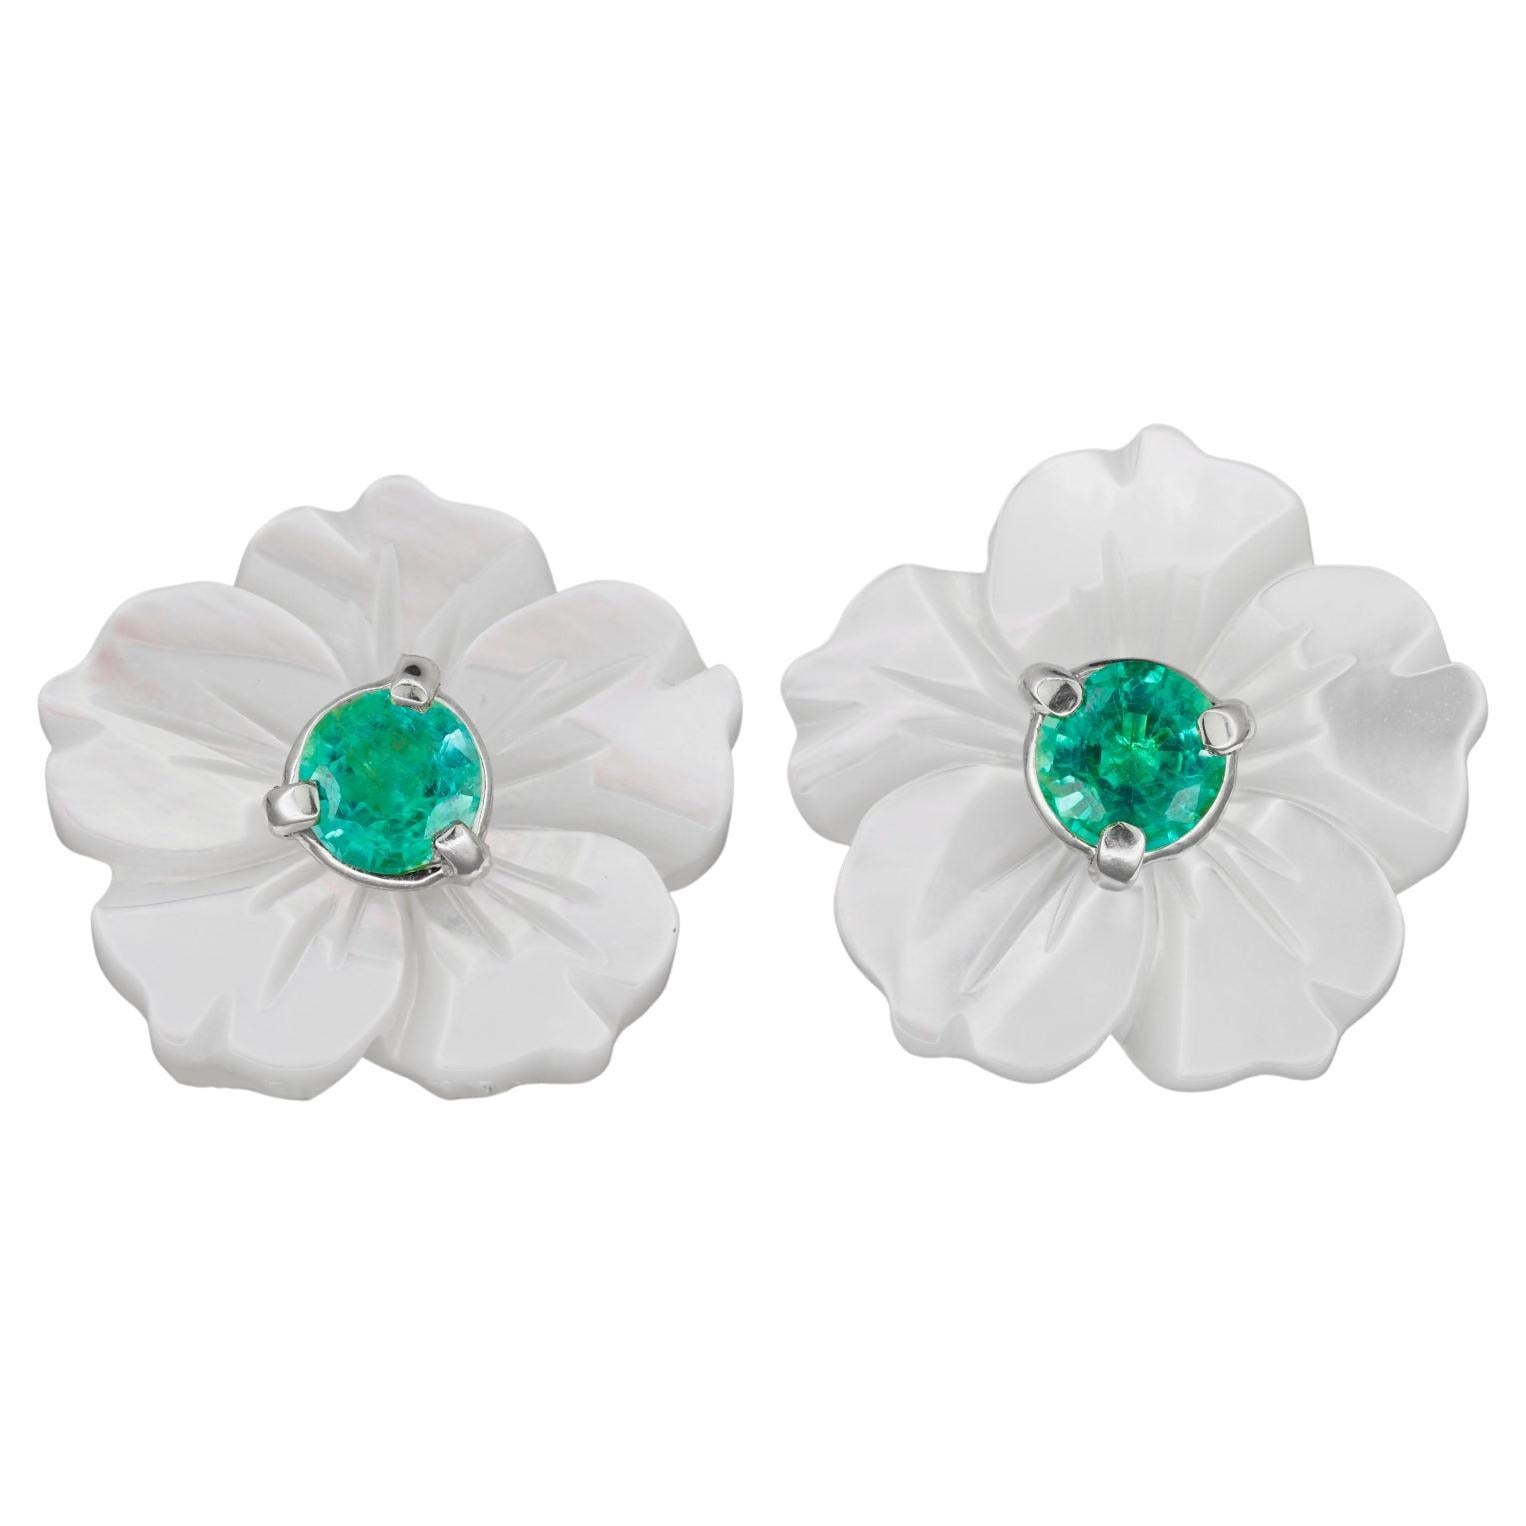 14 K Gold Earrings with Genuine Emeralds, Emerald Stud Earrrings